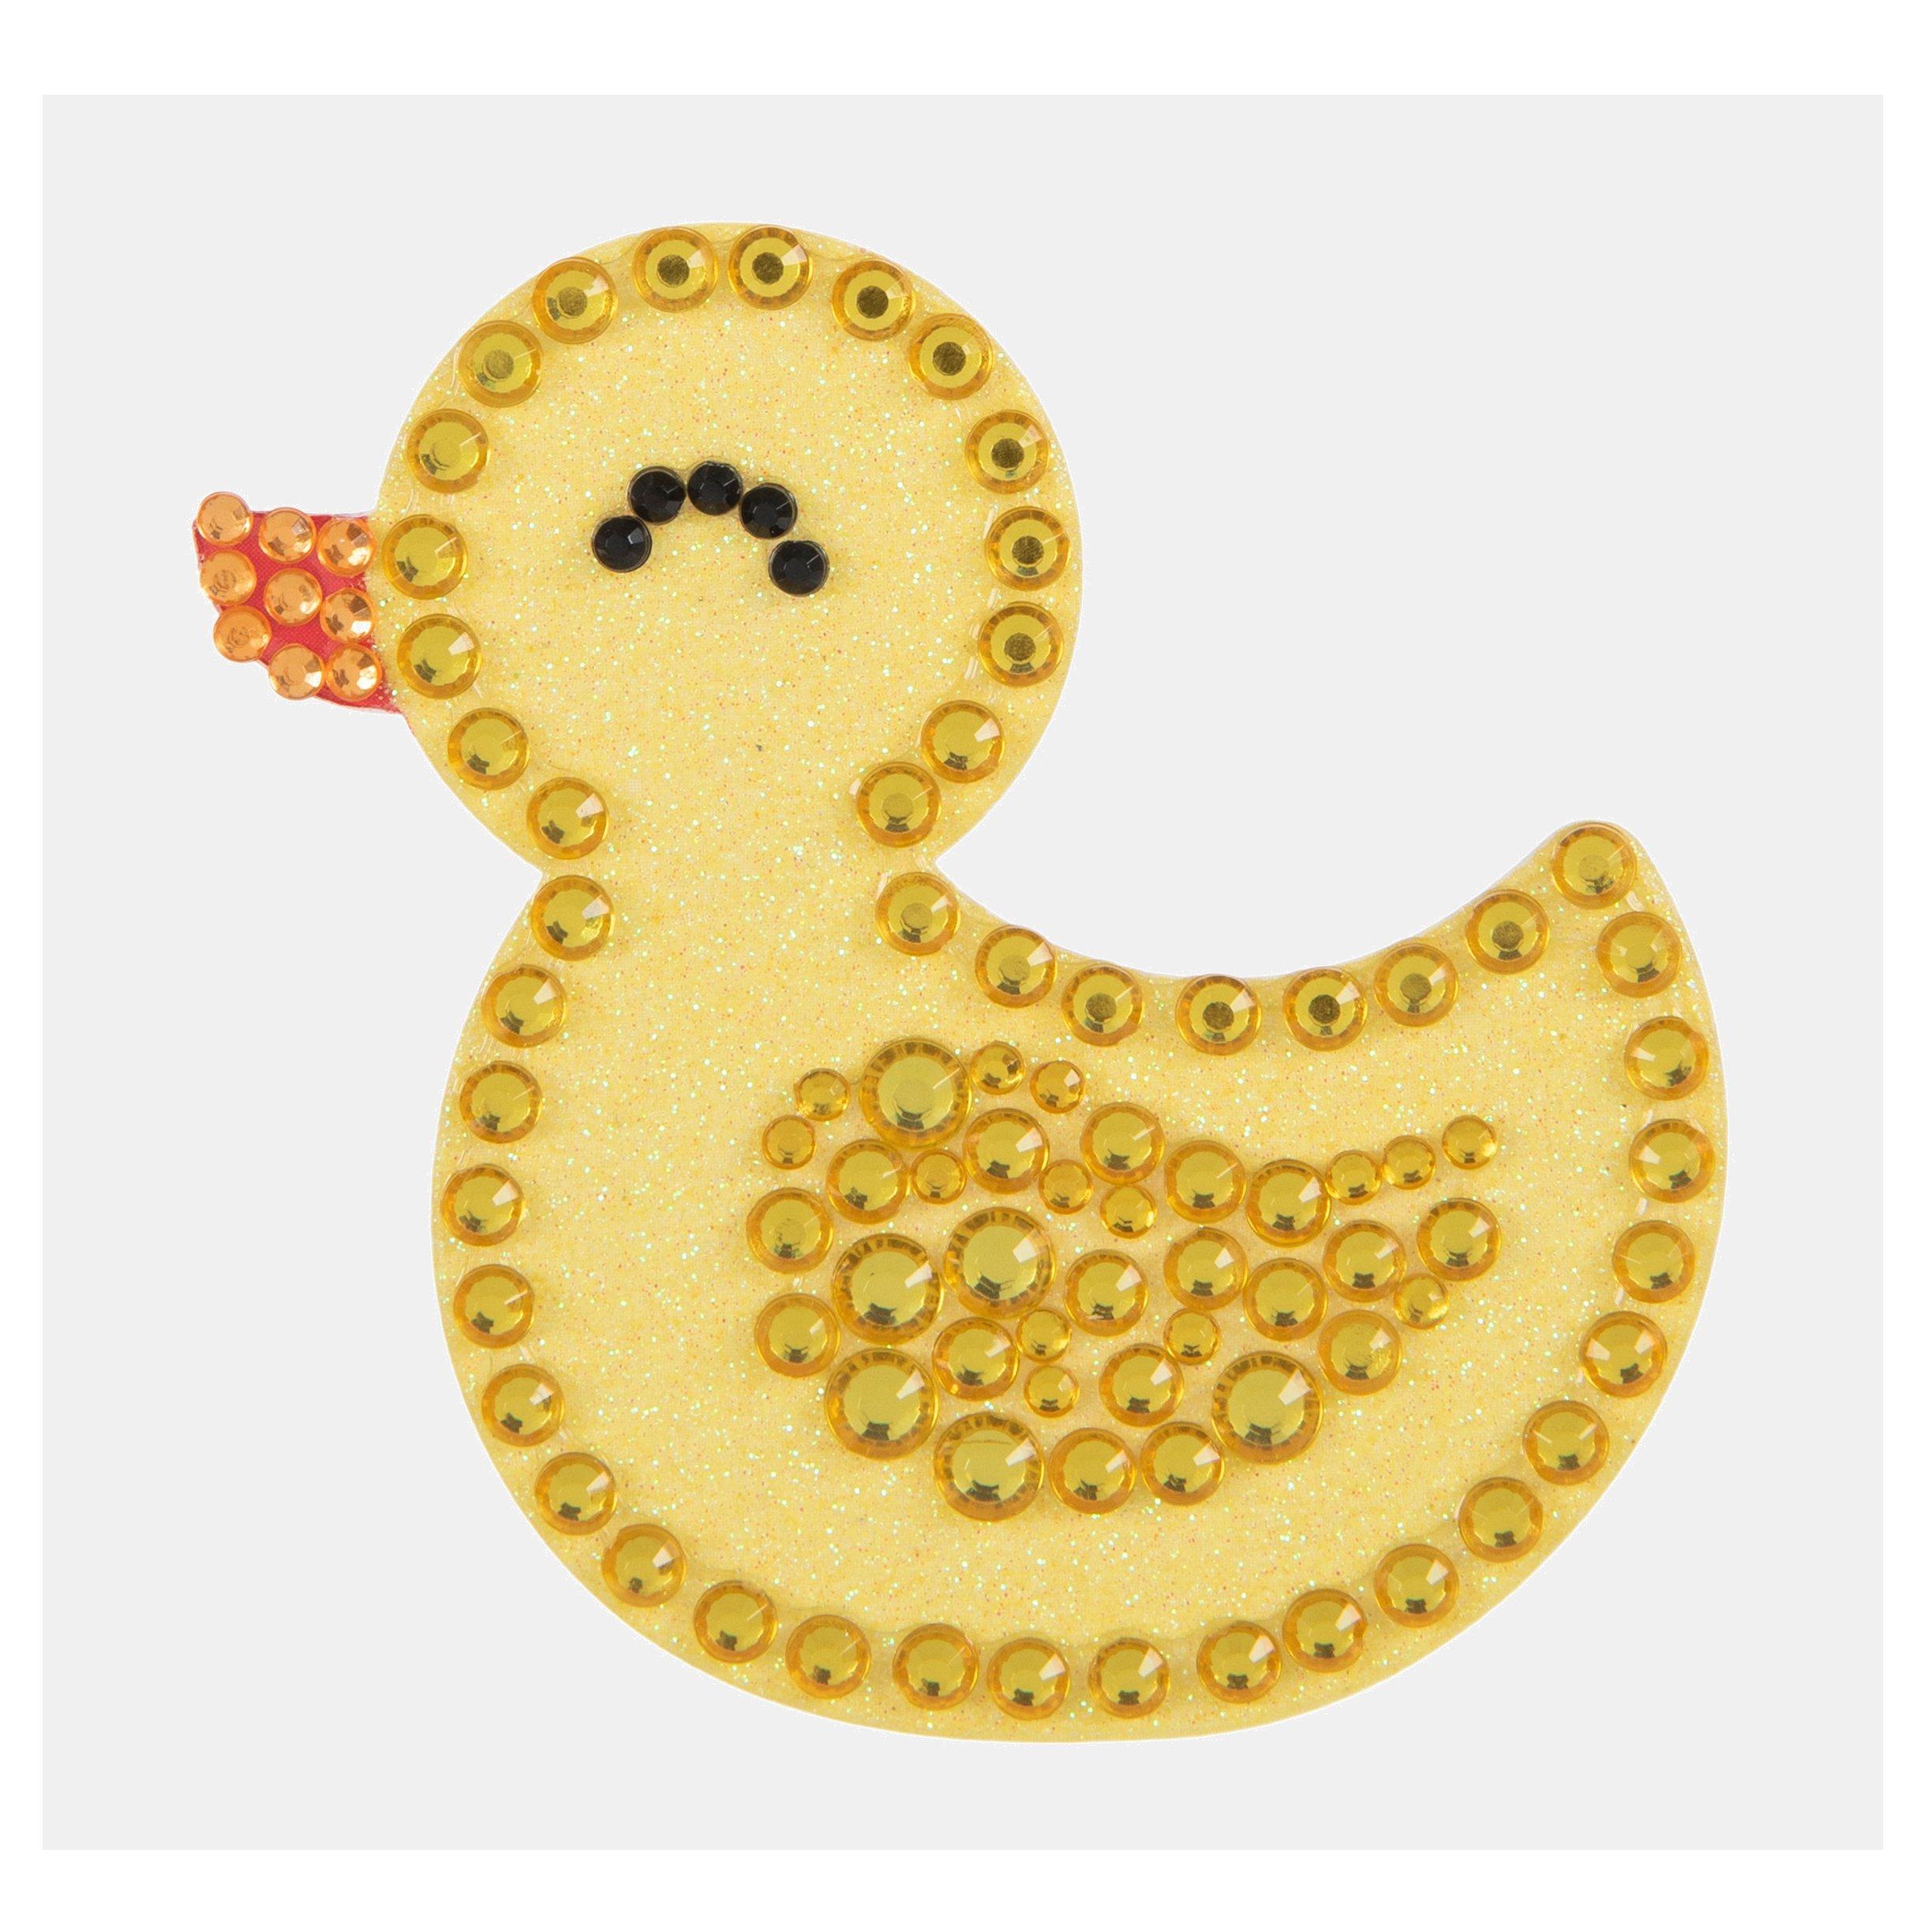 Miniature Rubber Ducks, Hobby Lobby